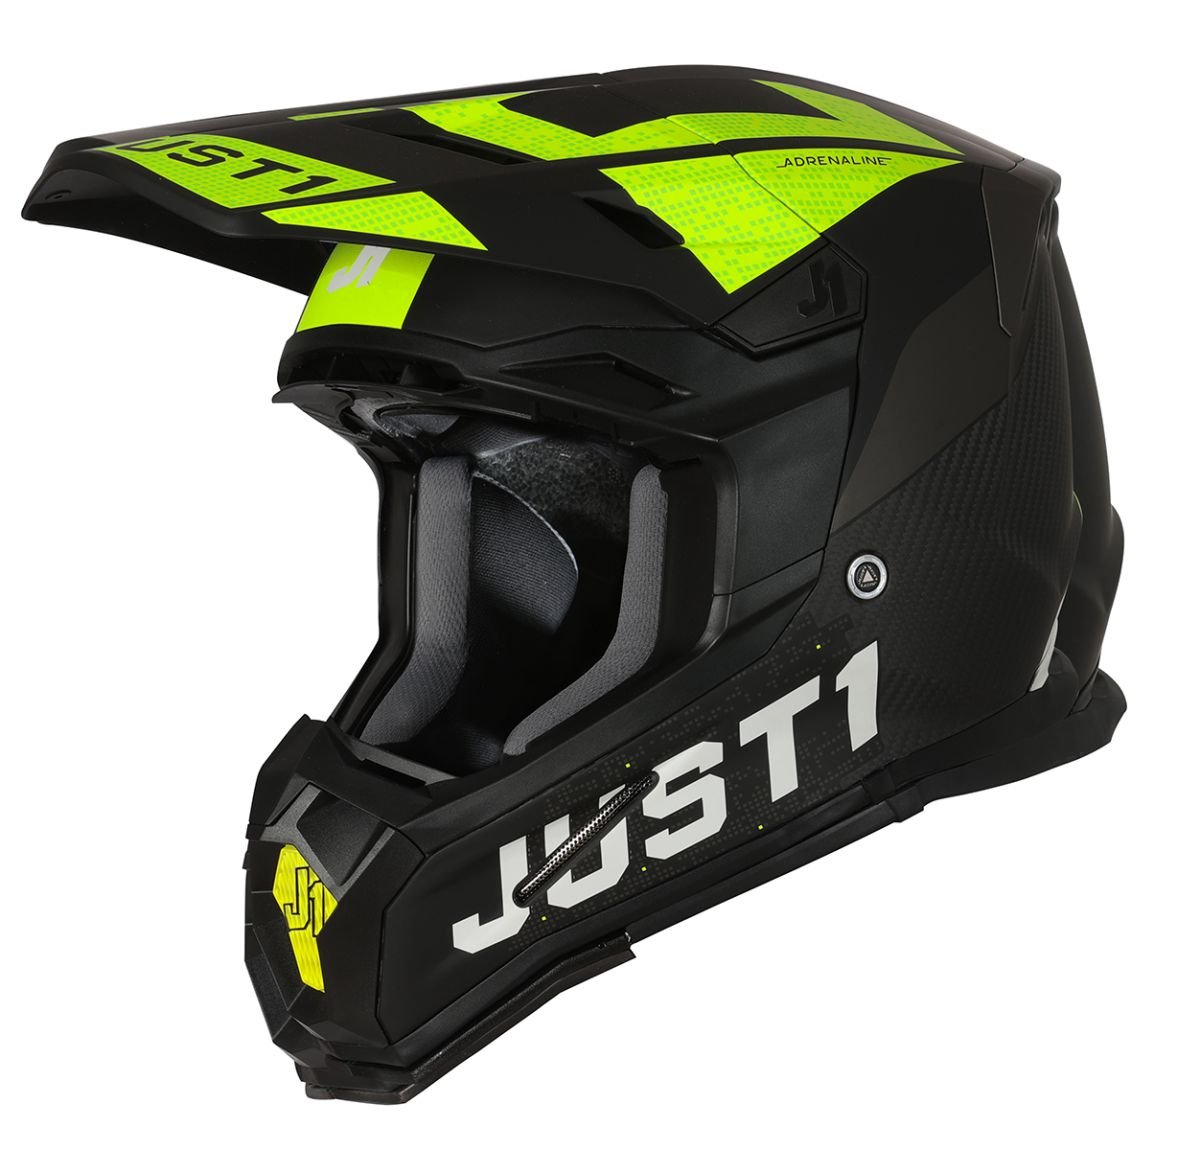 Image of EU Just1 Helmet J-22 Adrenaline Noir Jaune Fluo Carbon Mat Casque Cross Taille M